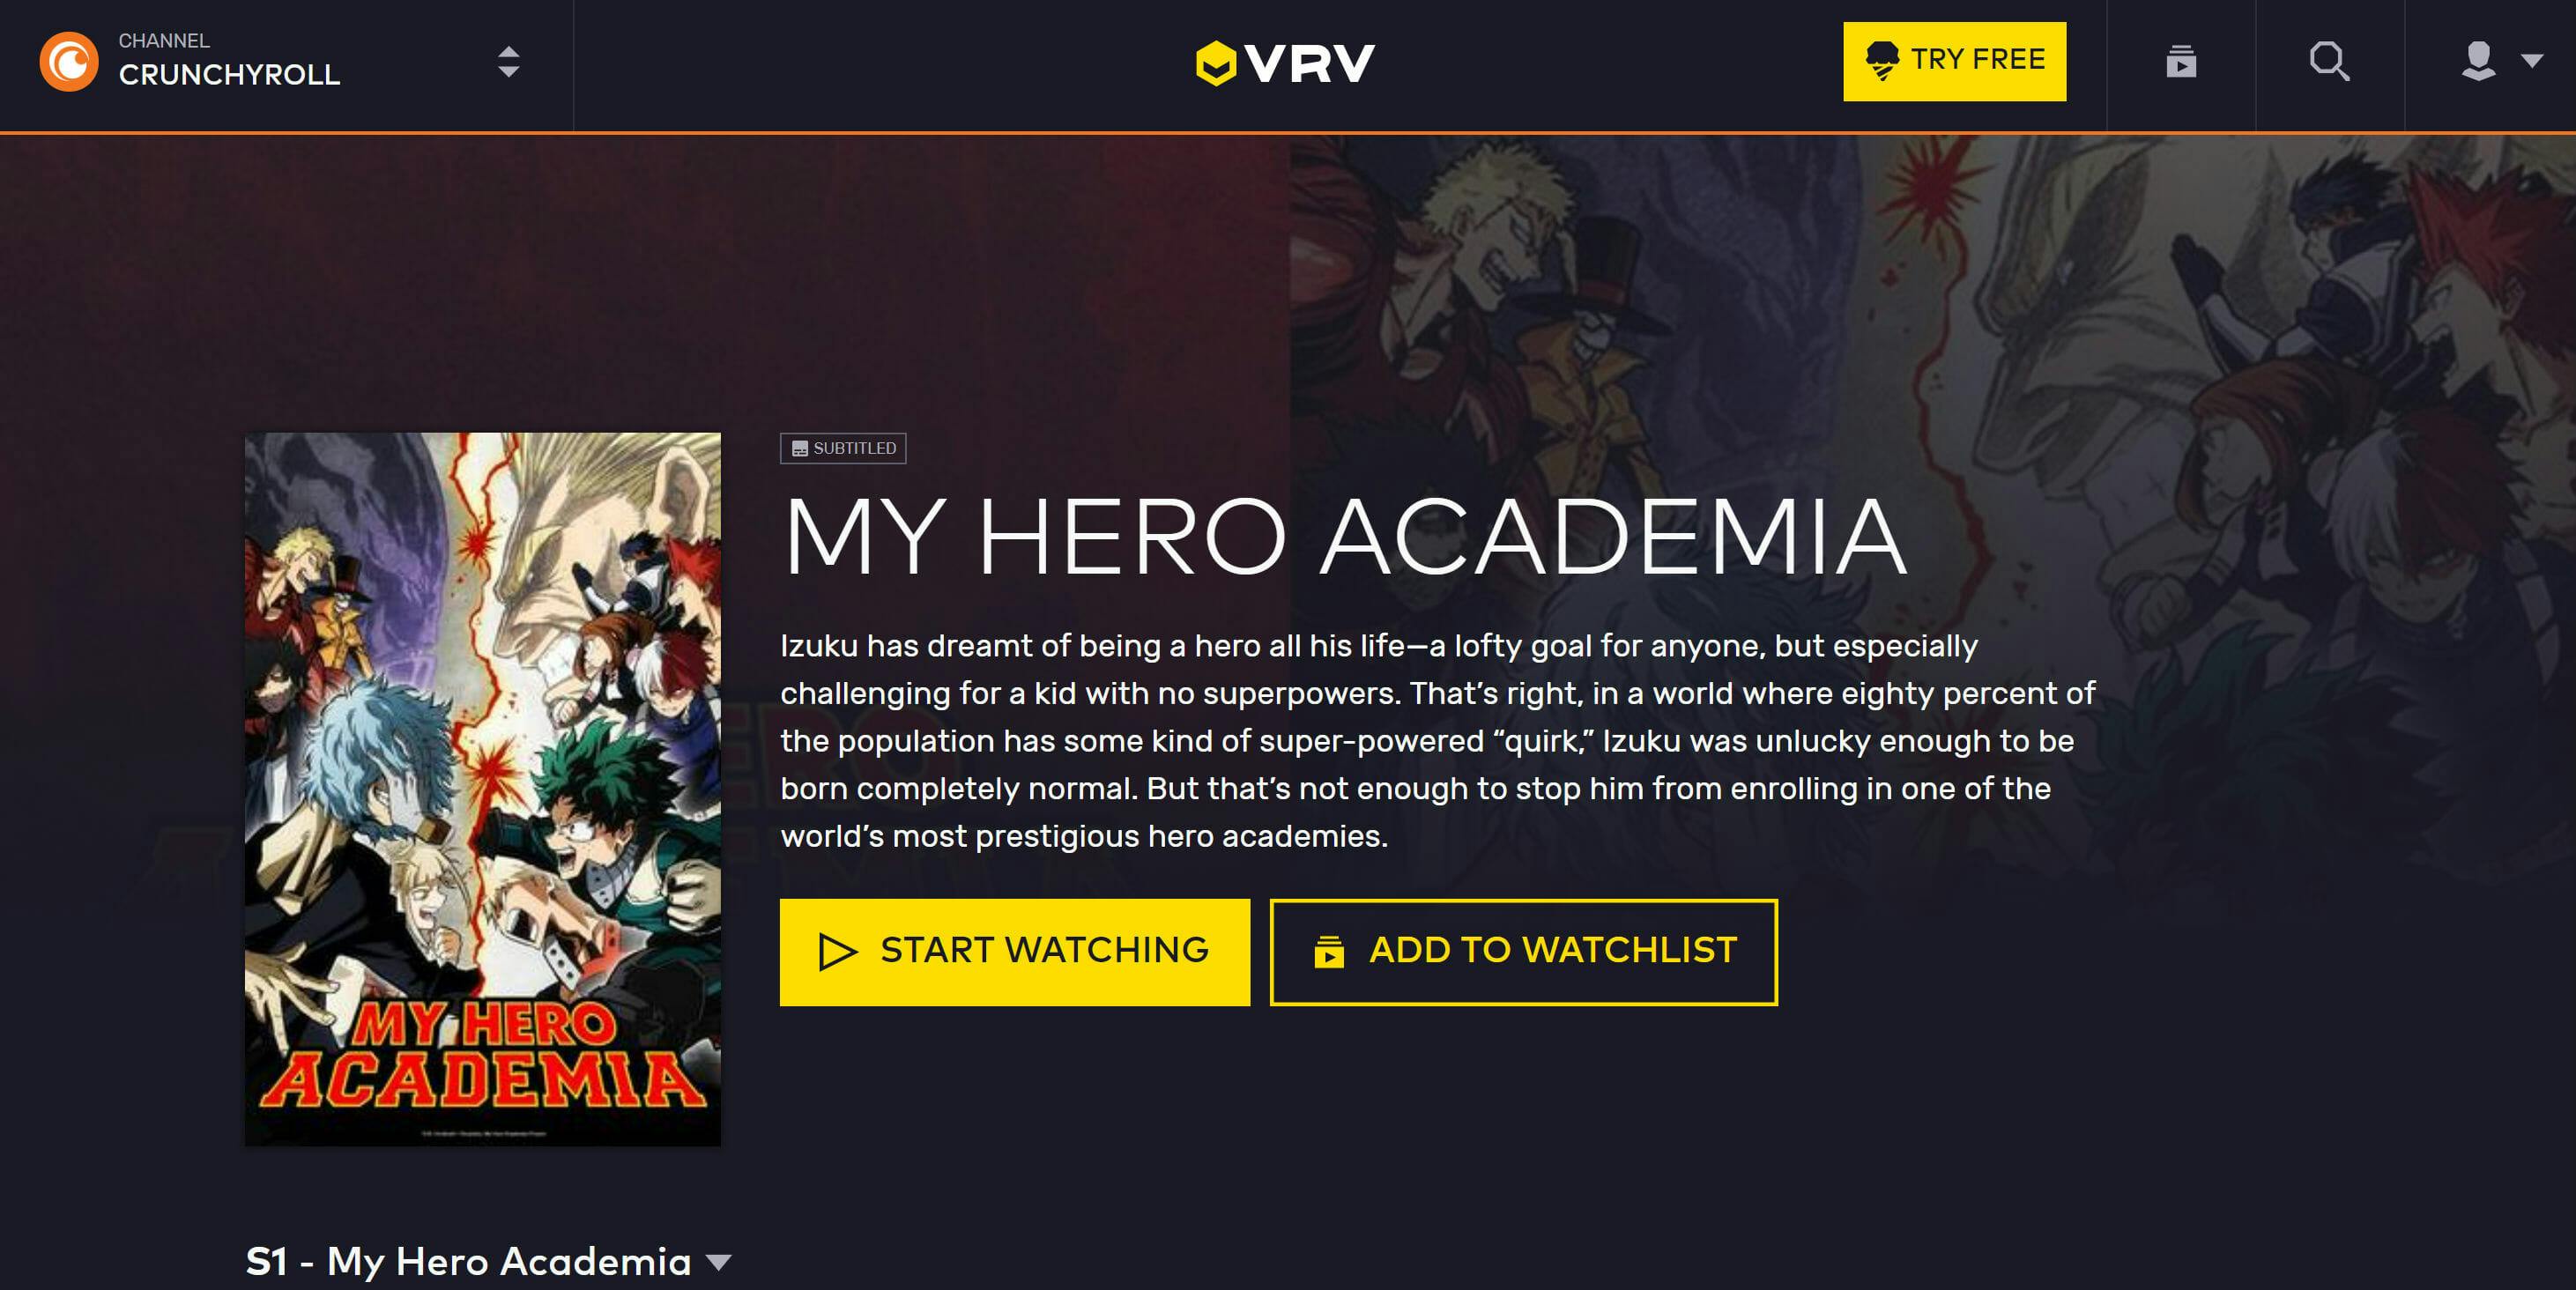 How to Watch My Hero Academia Online: 5 Easy Options